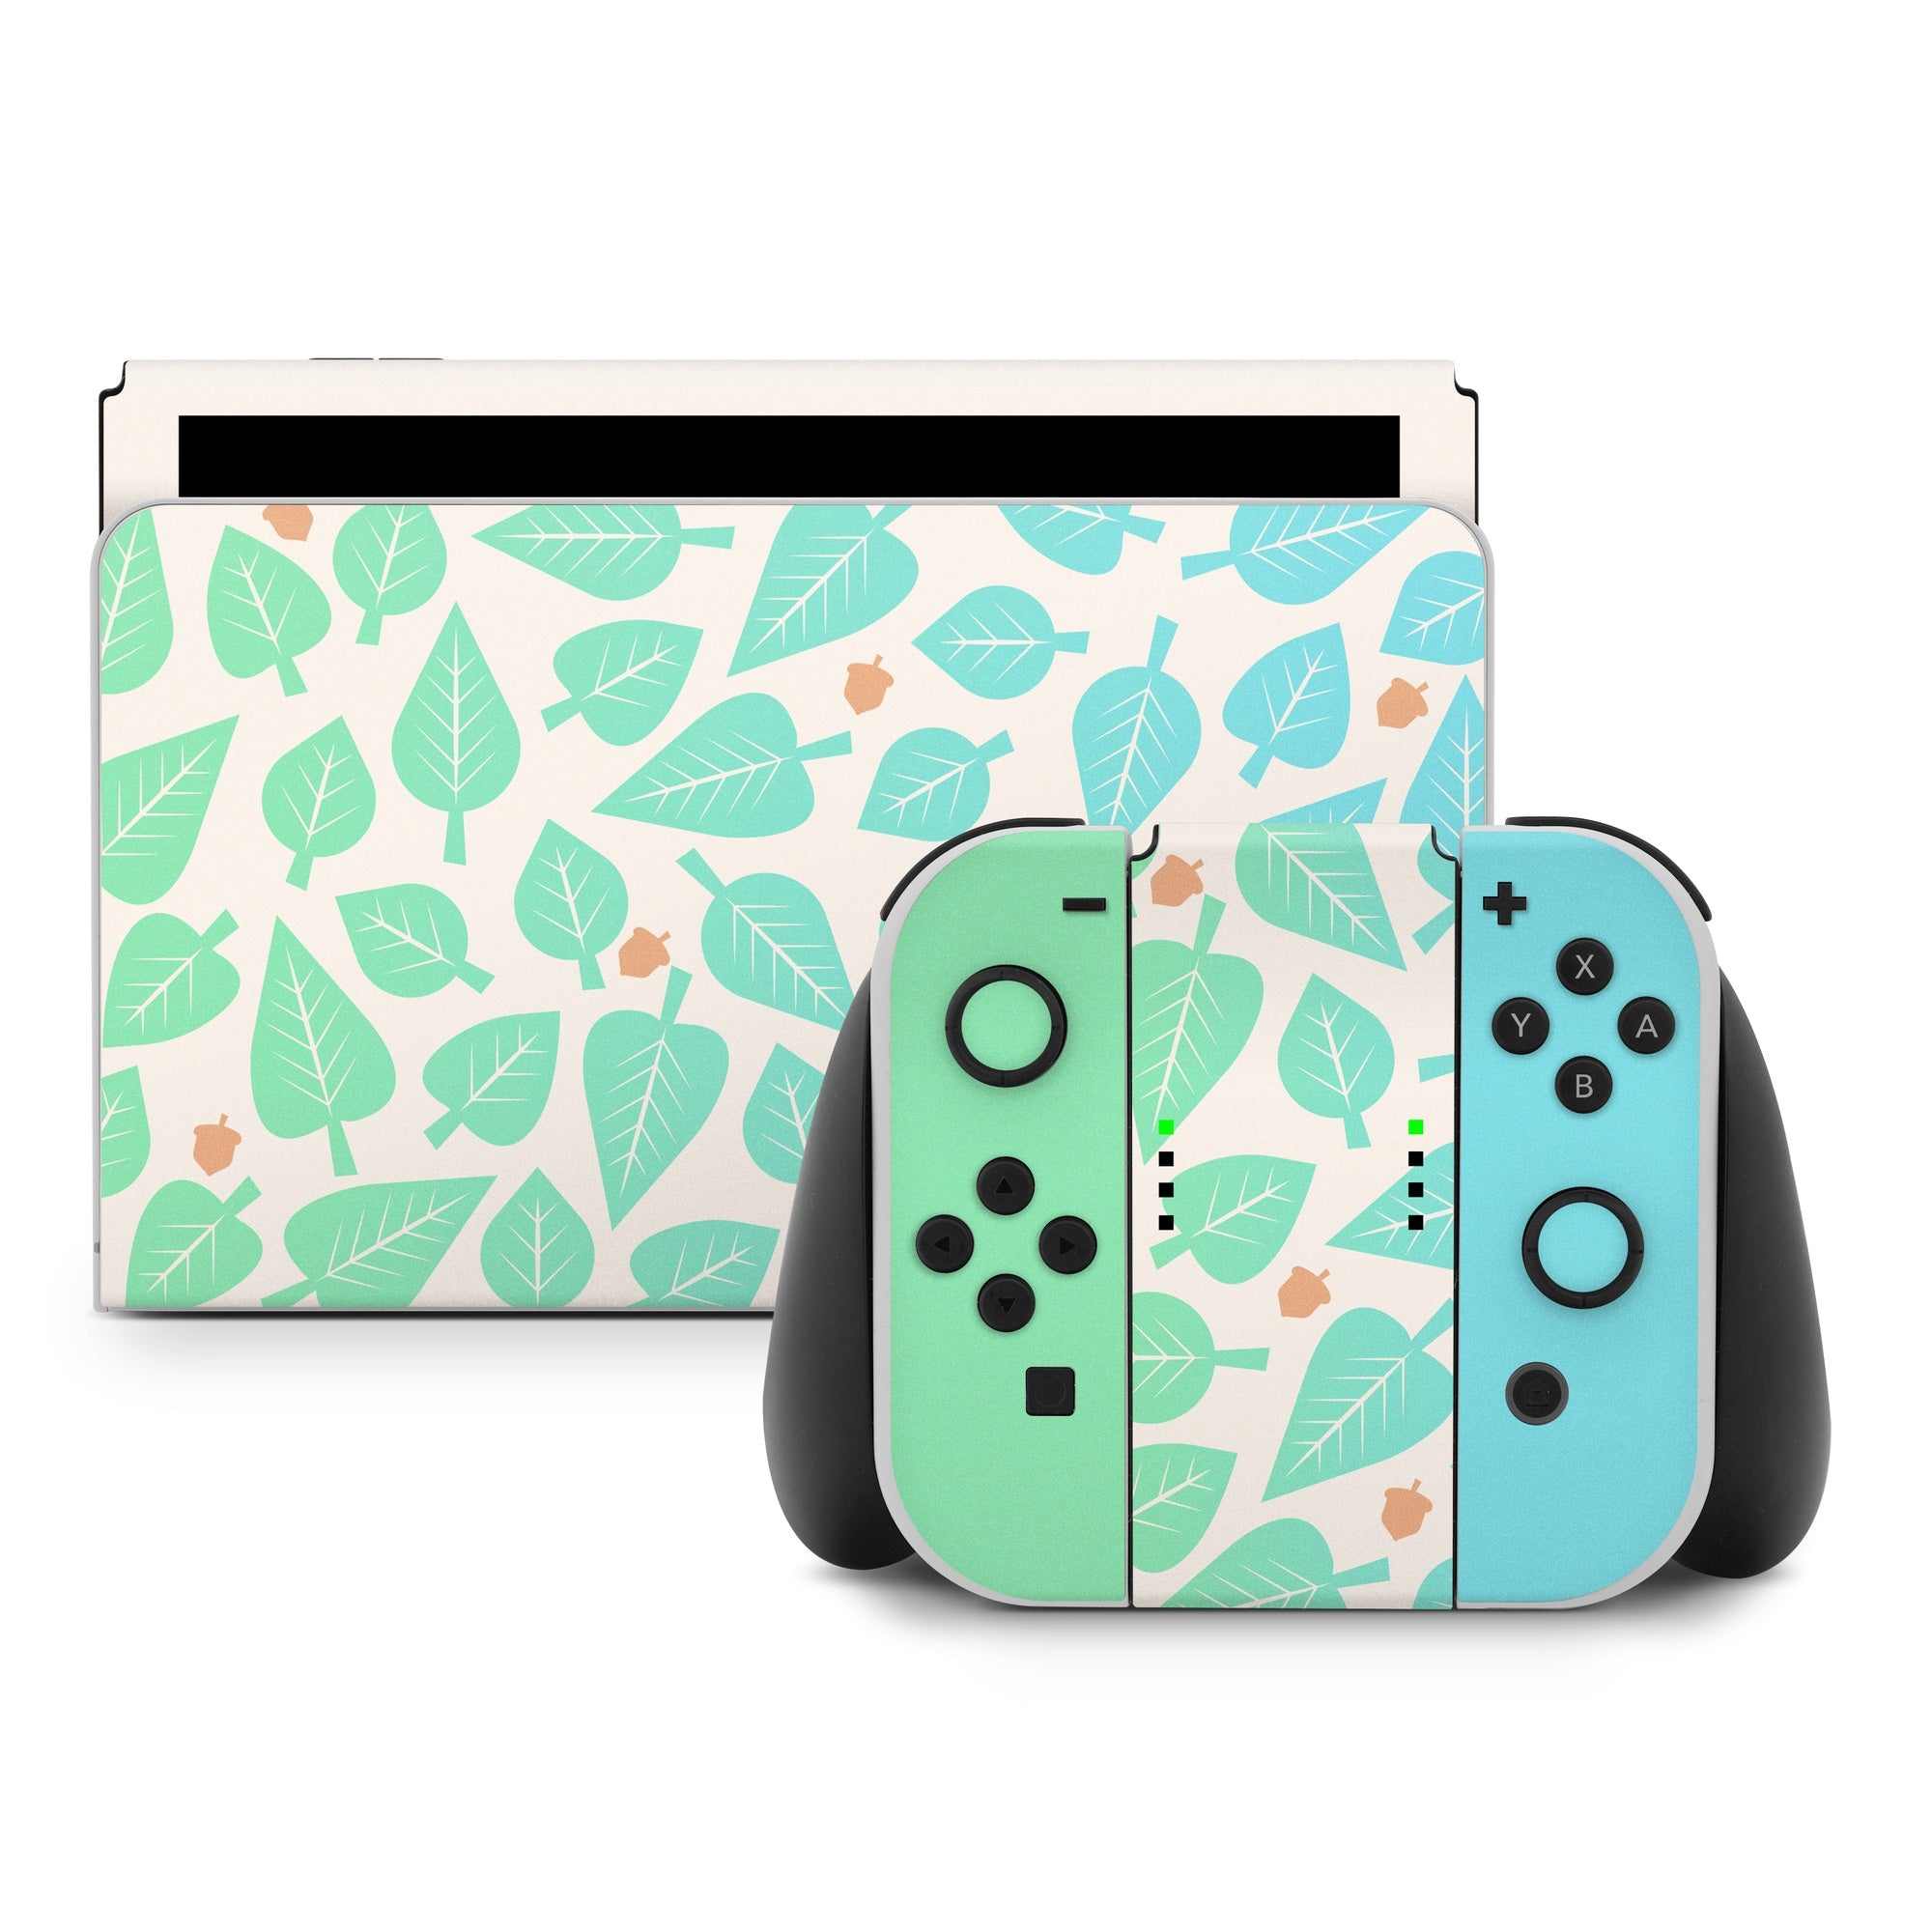 Happy Camper - Nintendo Switch Skin